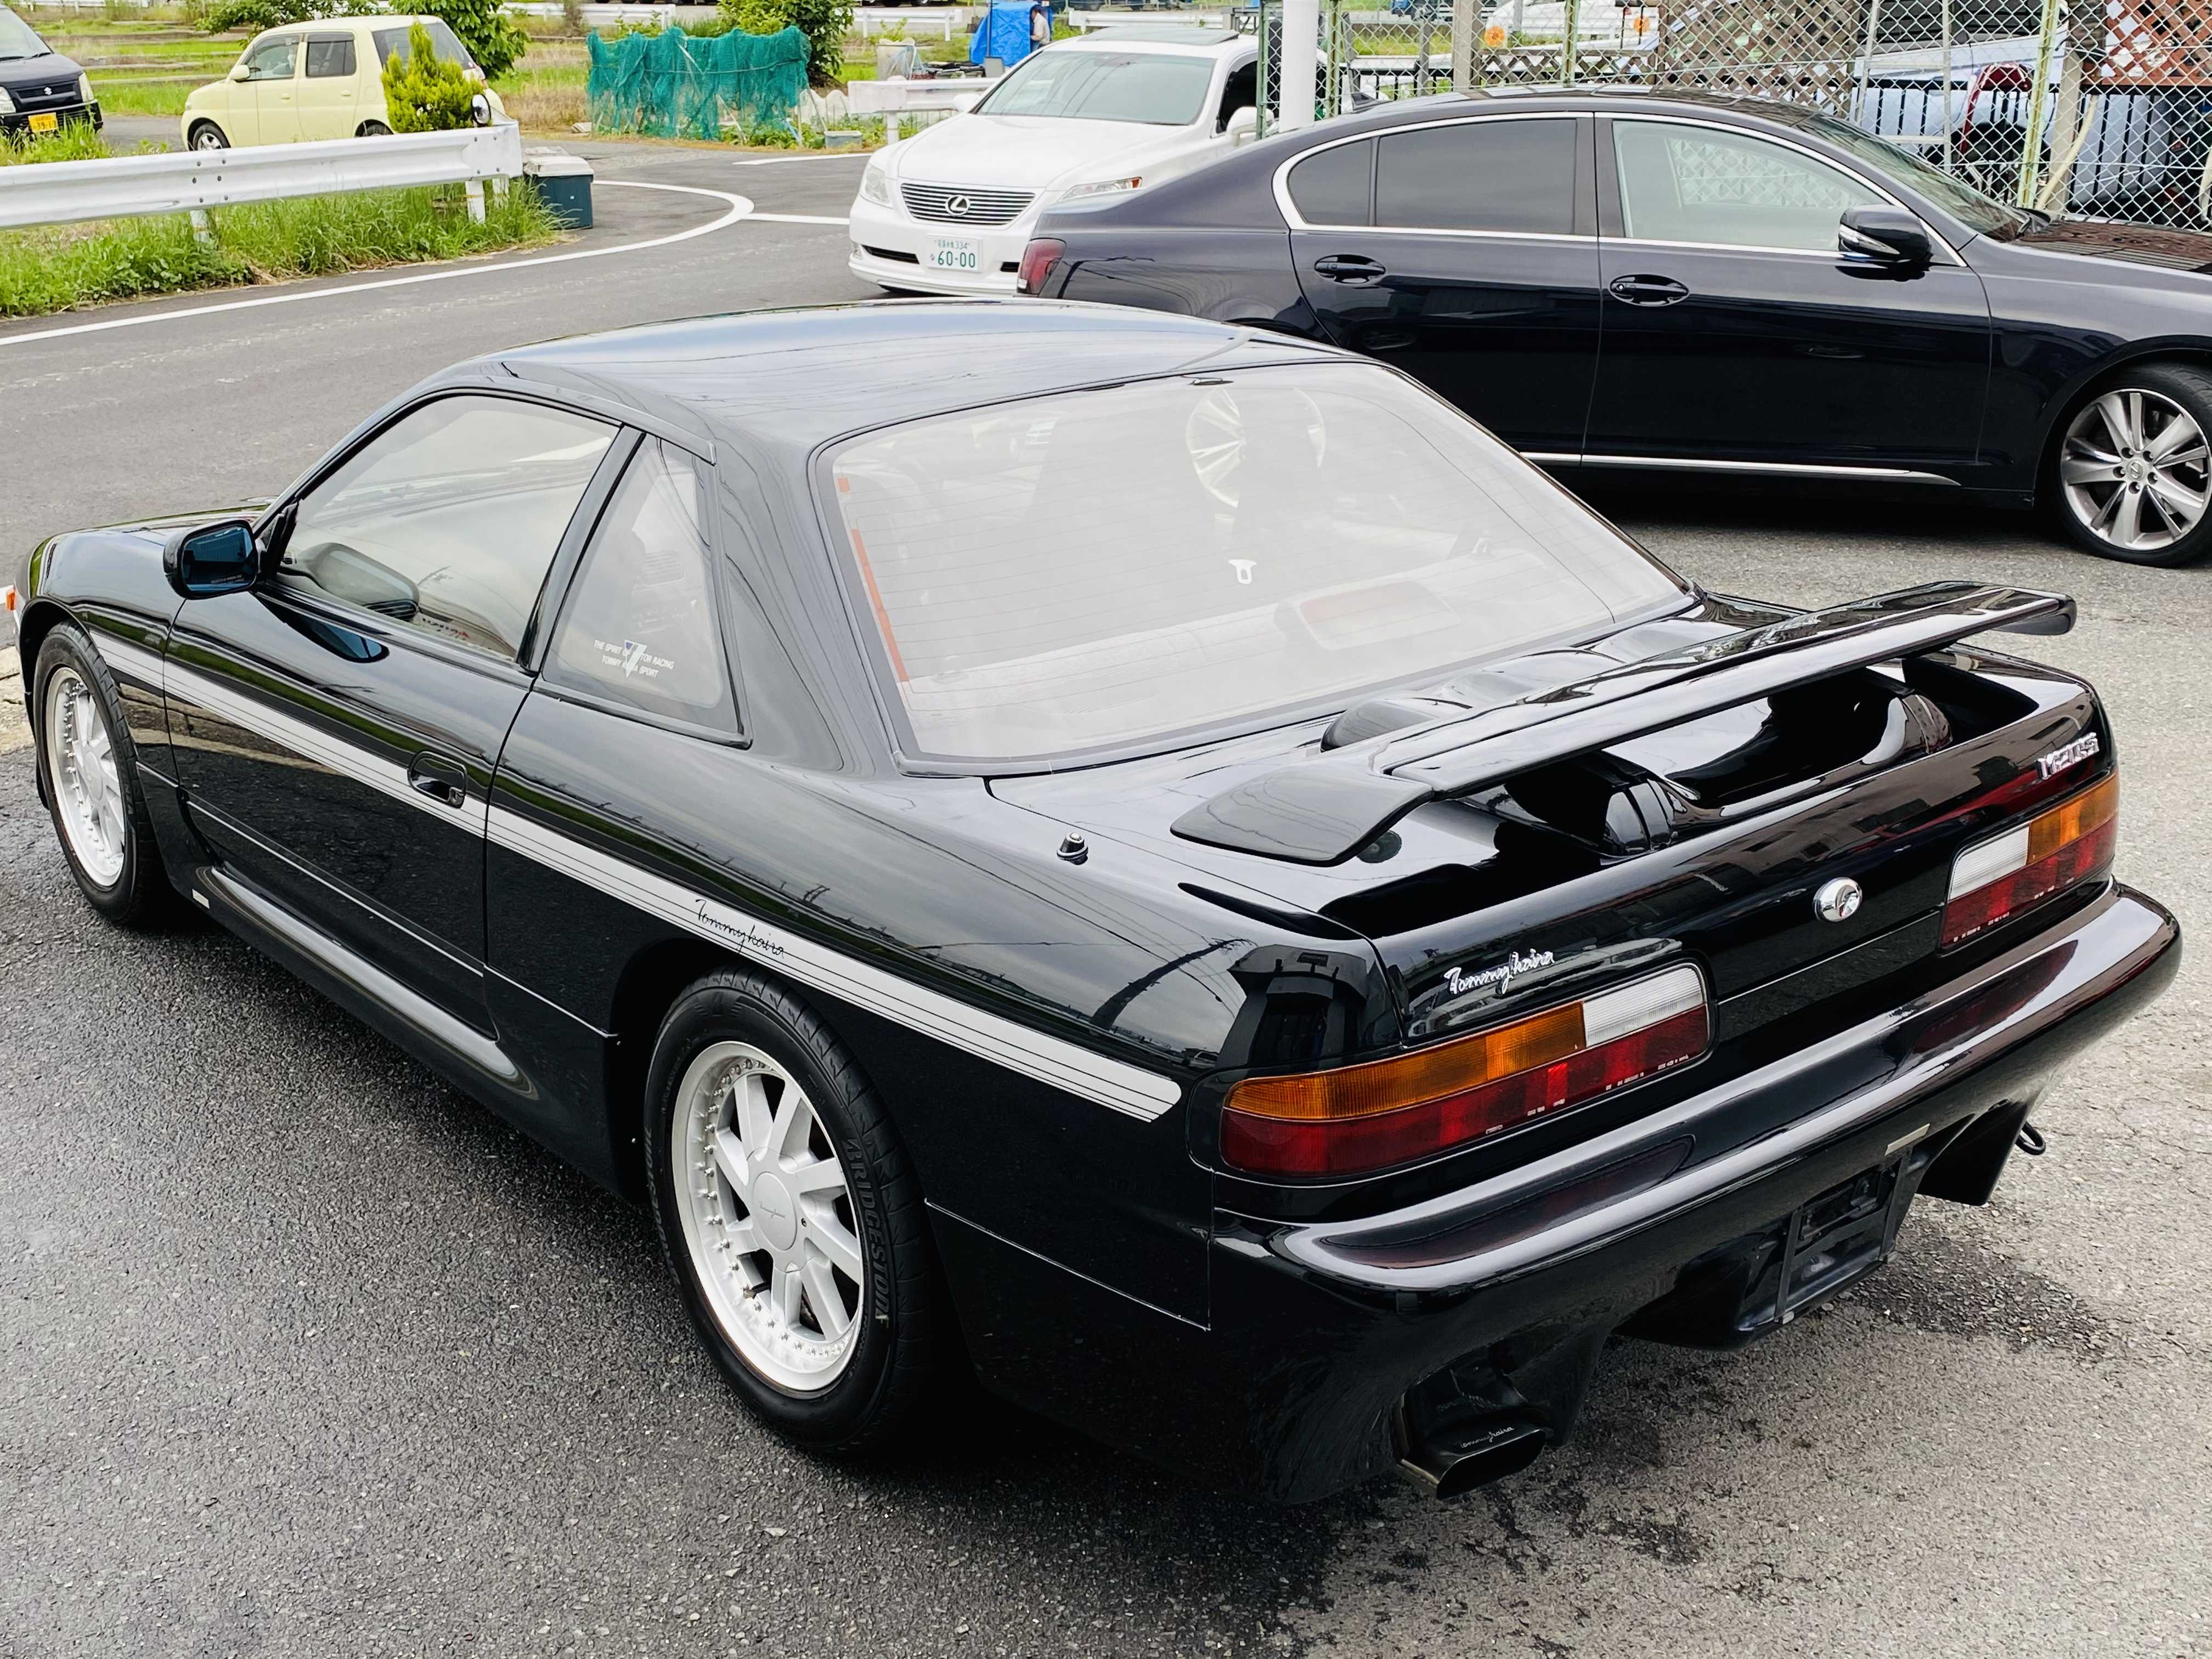 Nissan Silvia S13 Nissan Silvia Tommy Kaira Garage Defend JDM Car Black Cars Japanese Cars 4032x3024